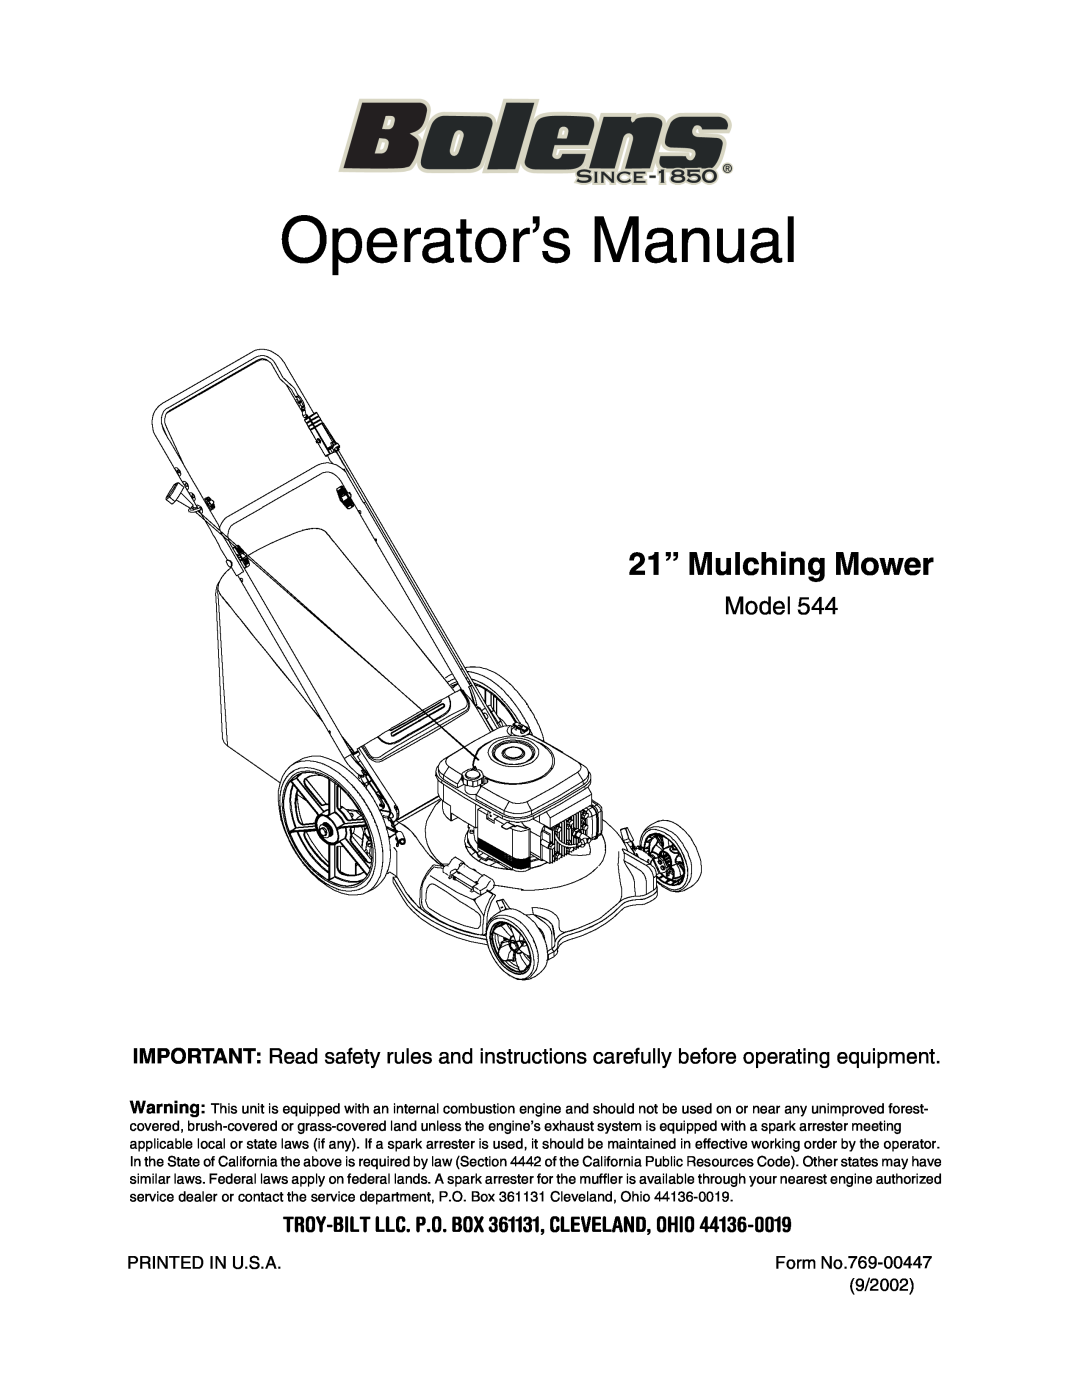 Bolens 544 manual Operator’s Manual, 21” Mulching Mower, Model, TROY-BILT LLC. P.O. BOX 361131, CLEVELAND, OHIO 